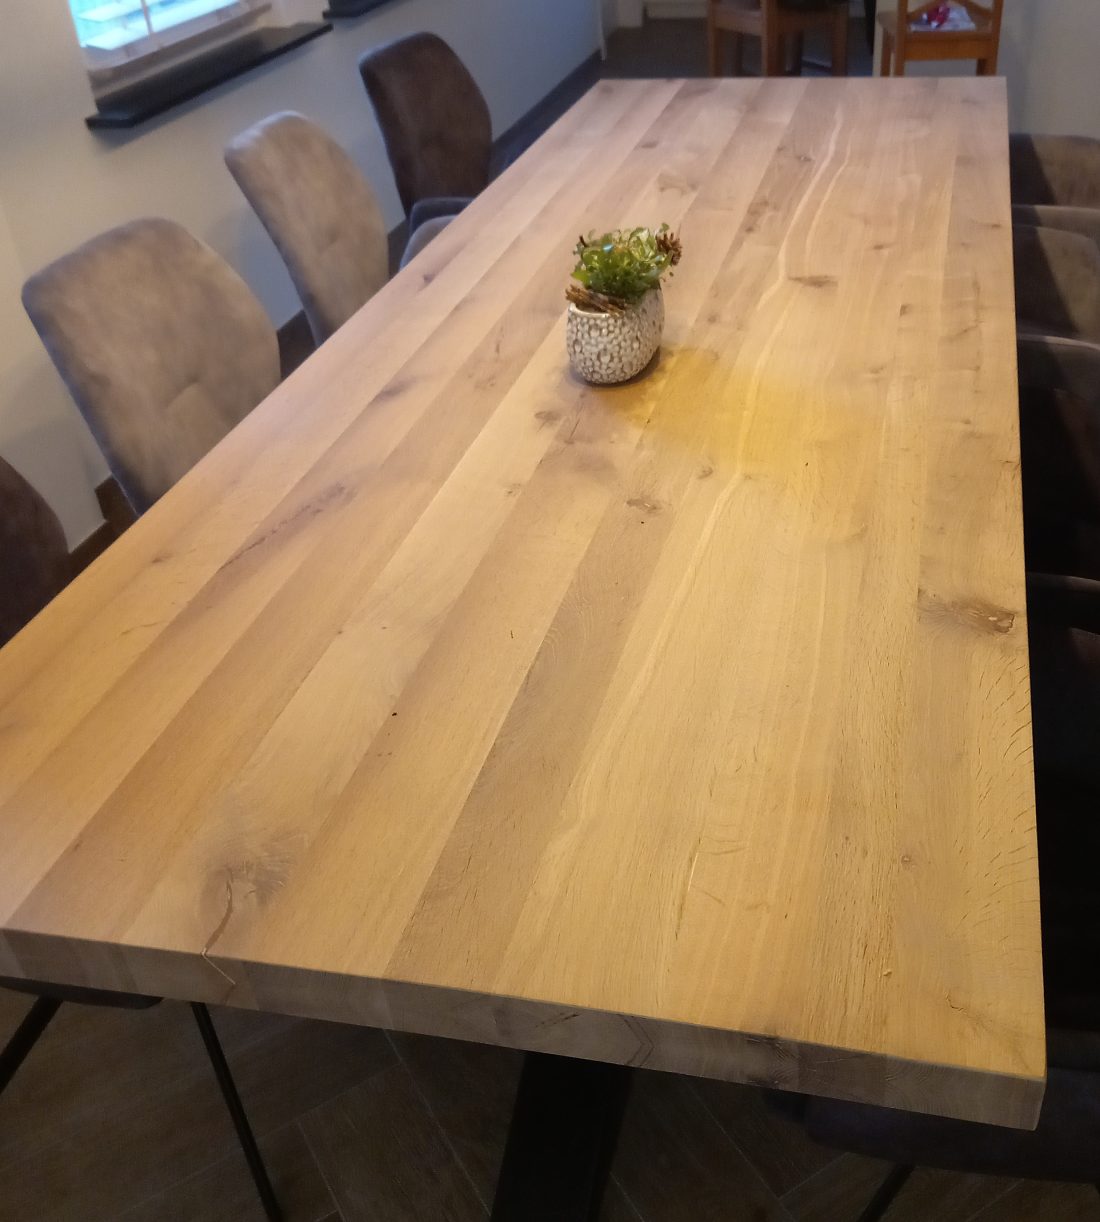 Rewa oak table 280 x 100 x 6cm with matrix base 12 x 12cm with black coating